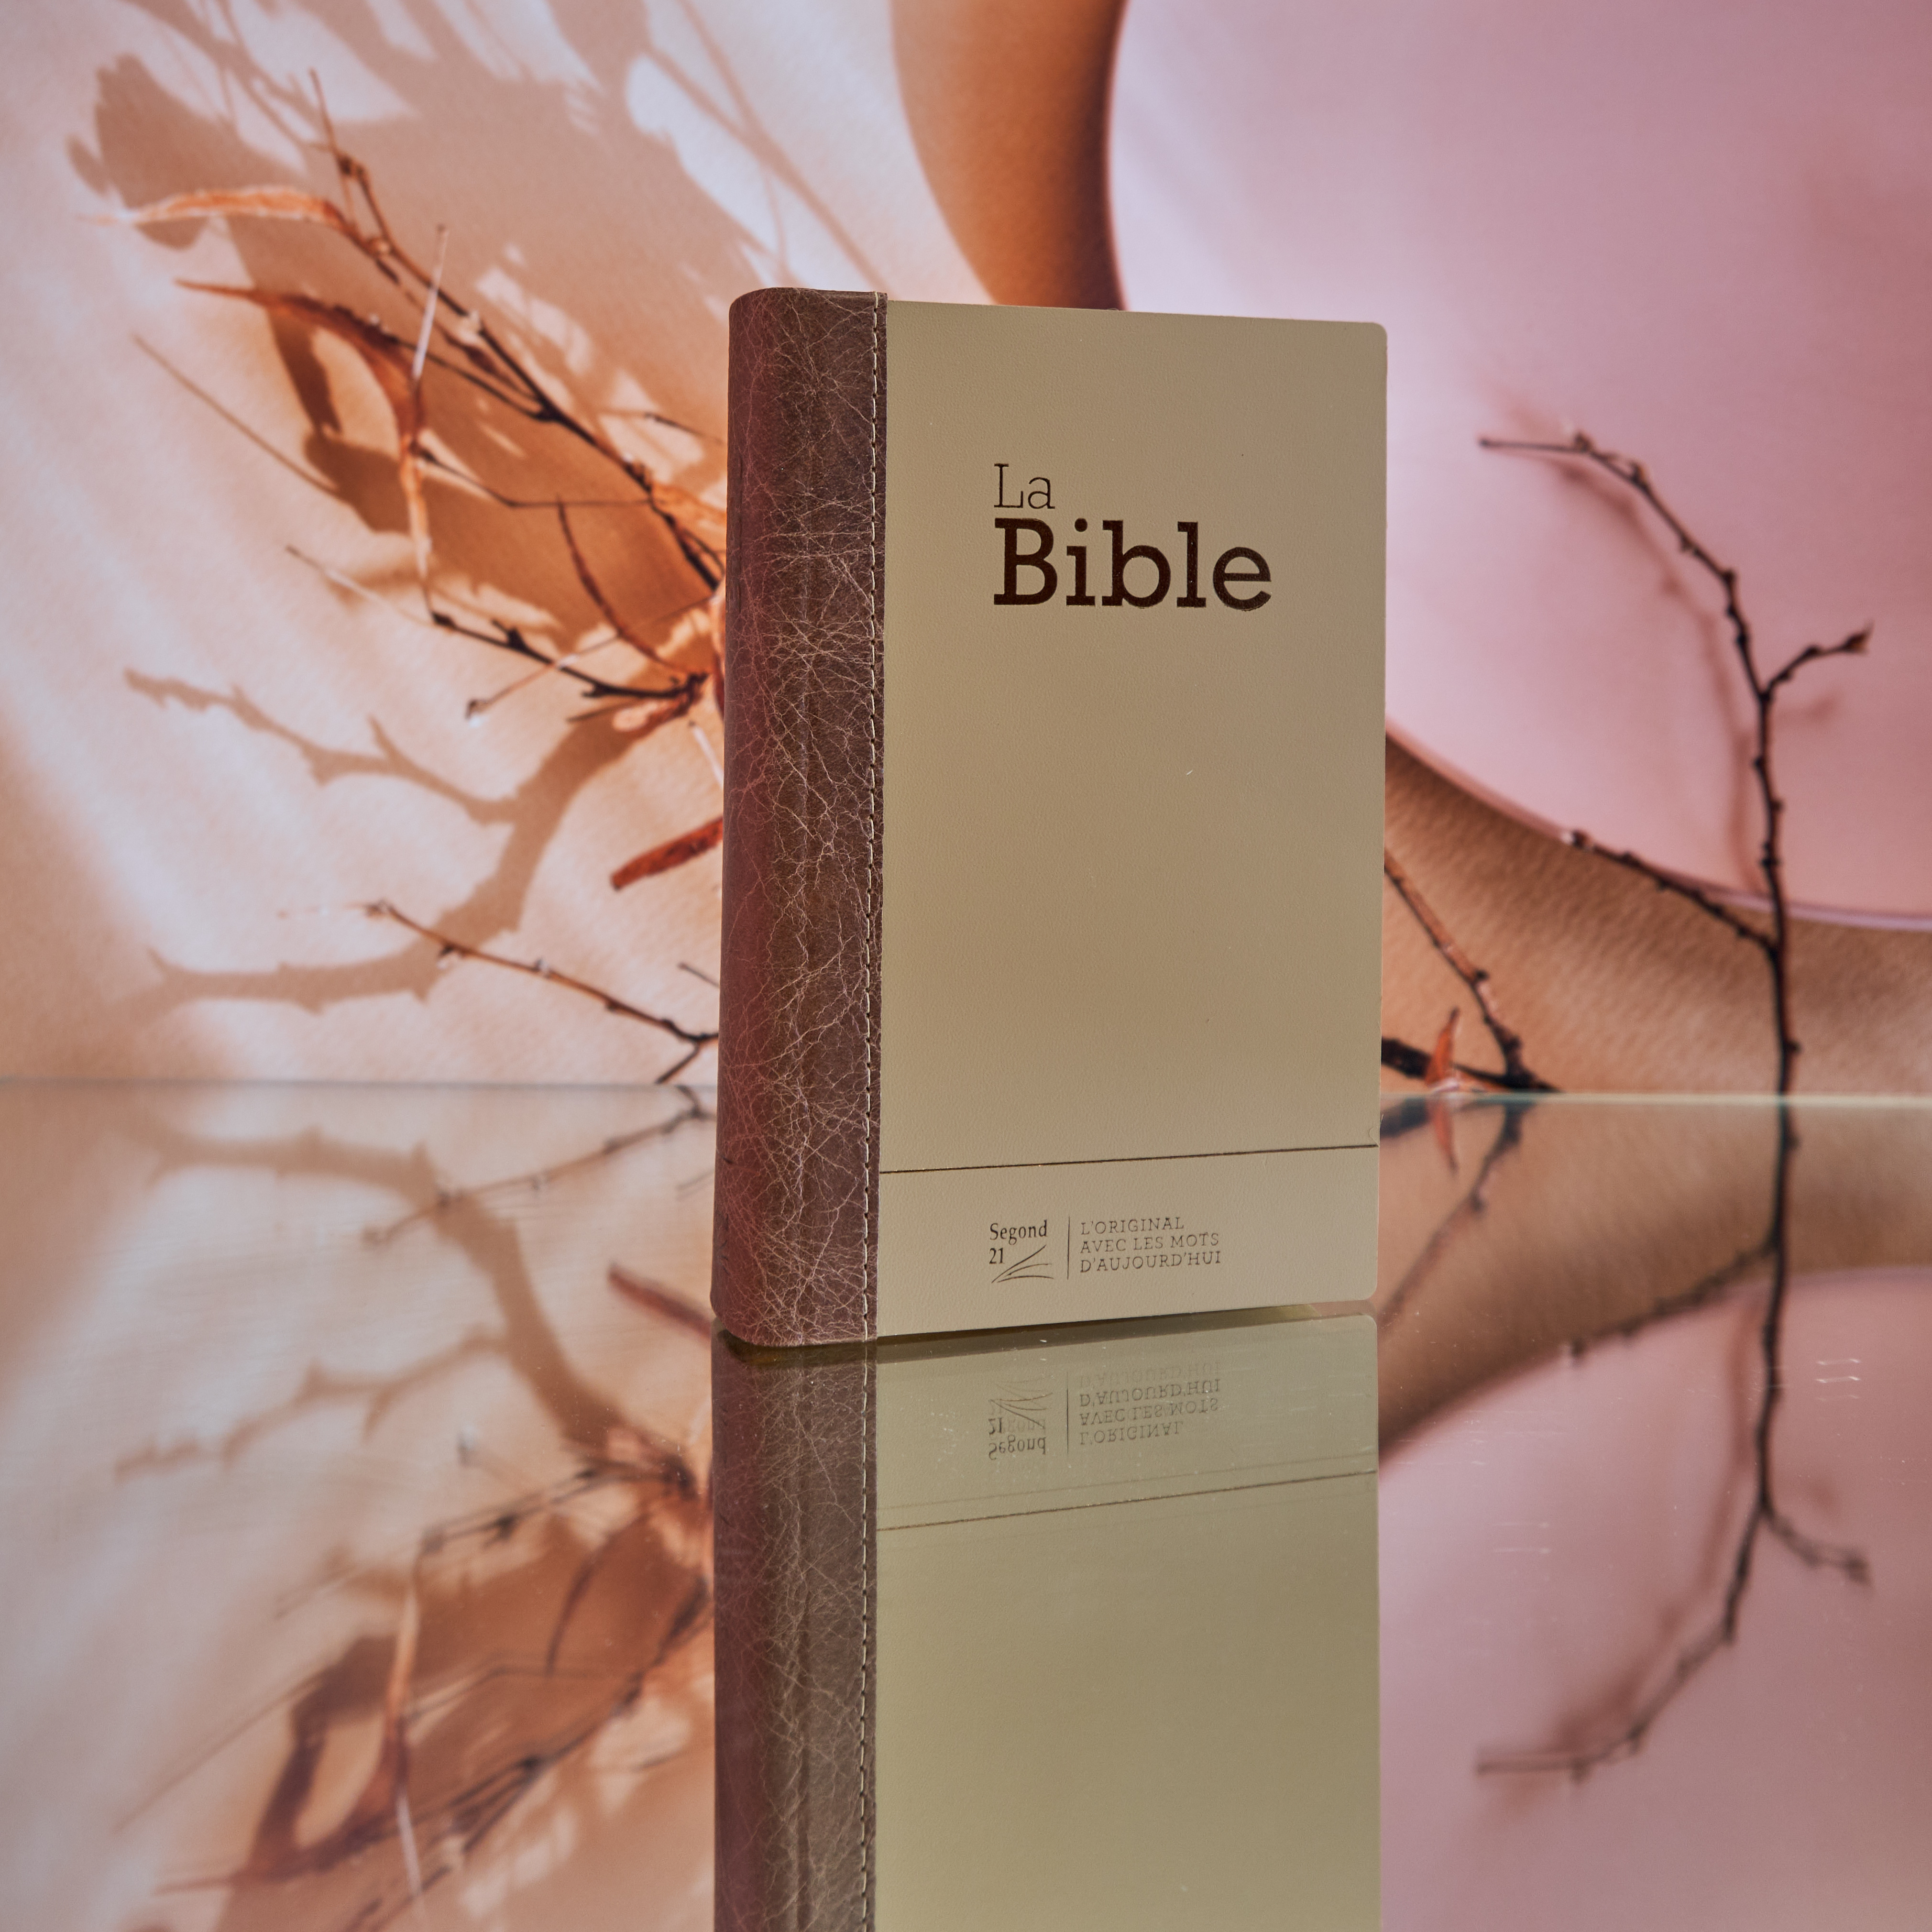 BIBLE SEGOND 21 COMPACTE "PREMIUM STYLE" SEMI RIGIDE DUO CUIR PRALINE CHOCOLAT - TRANCHES DOREES